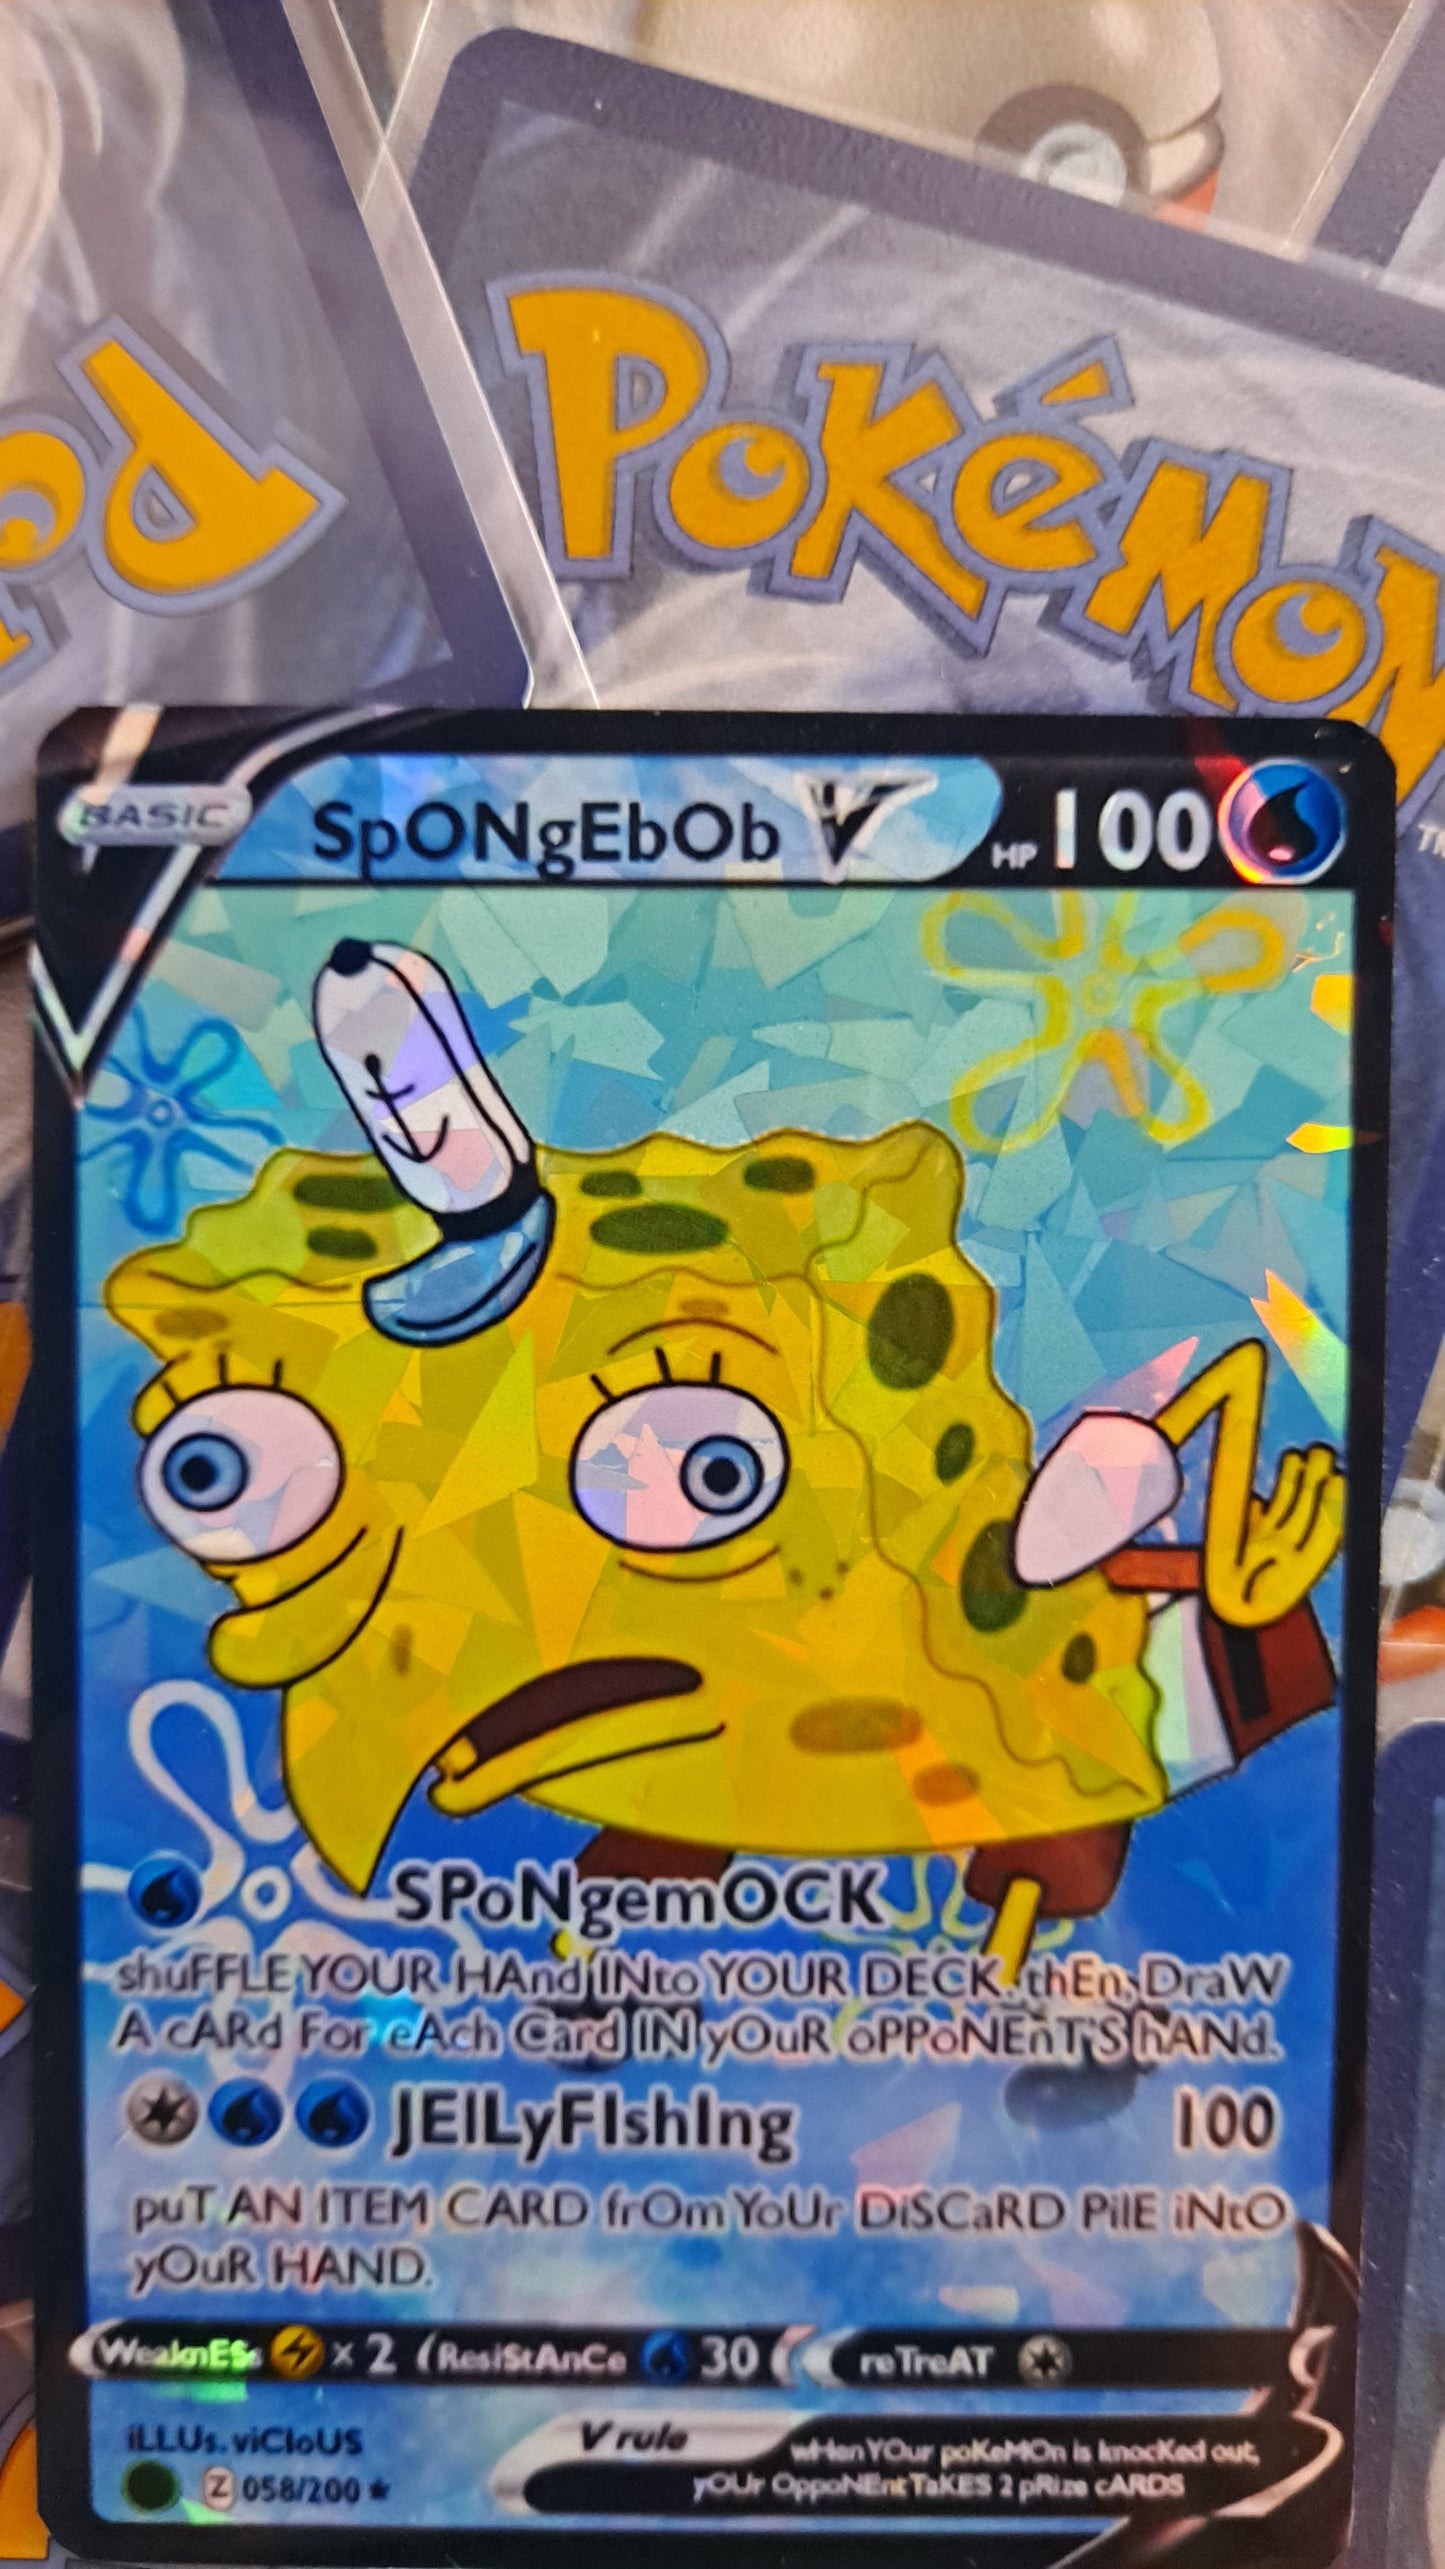 SpongeBob SquarePants Pokemon Card